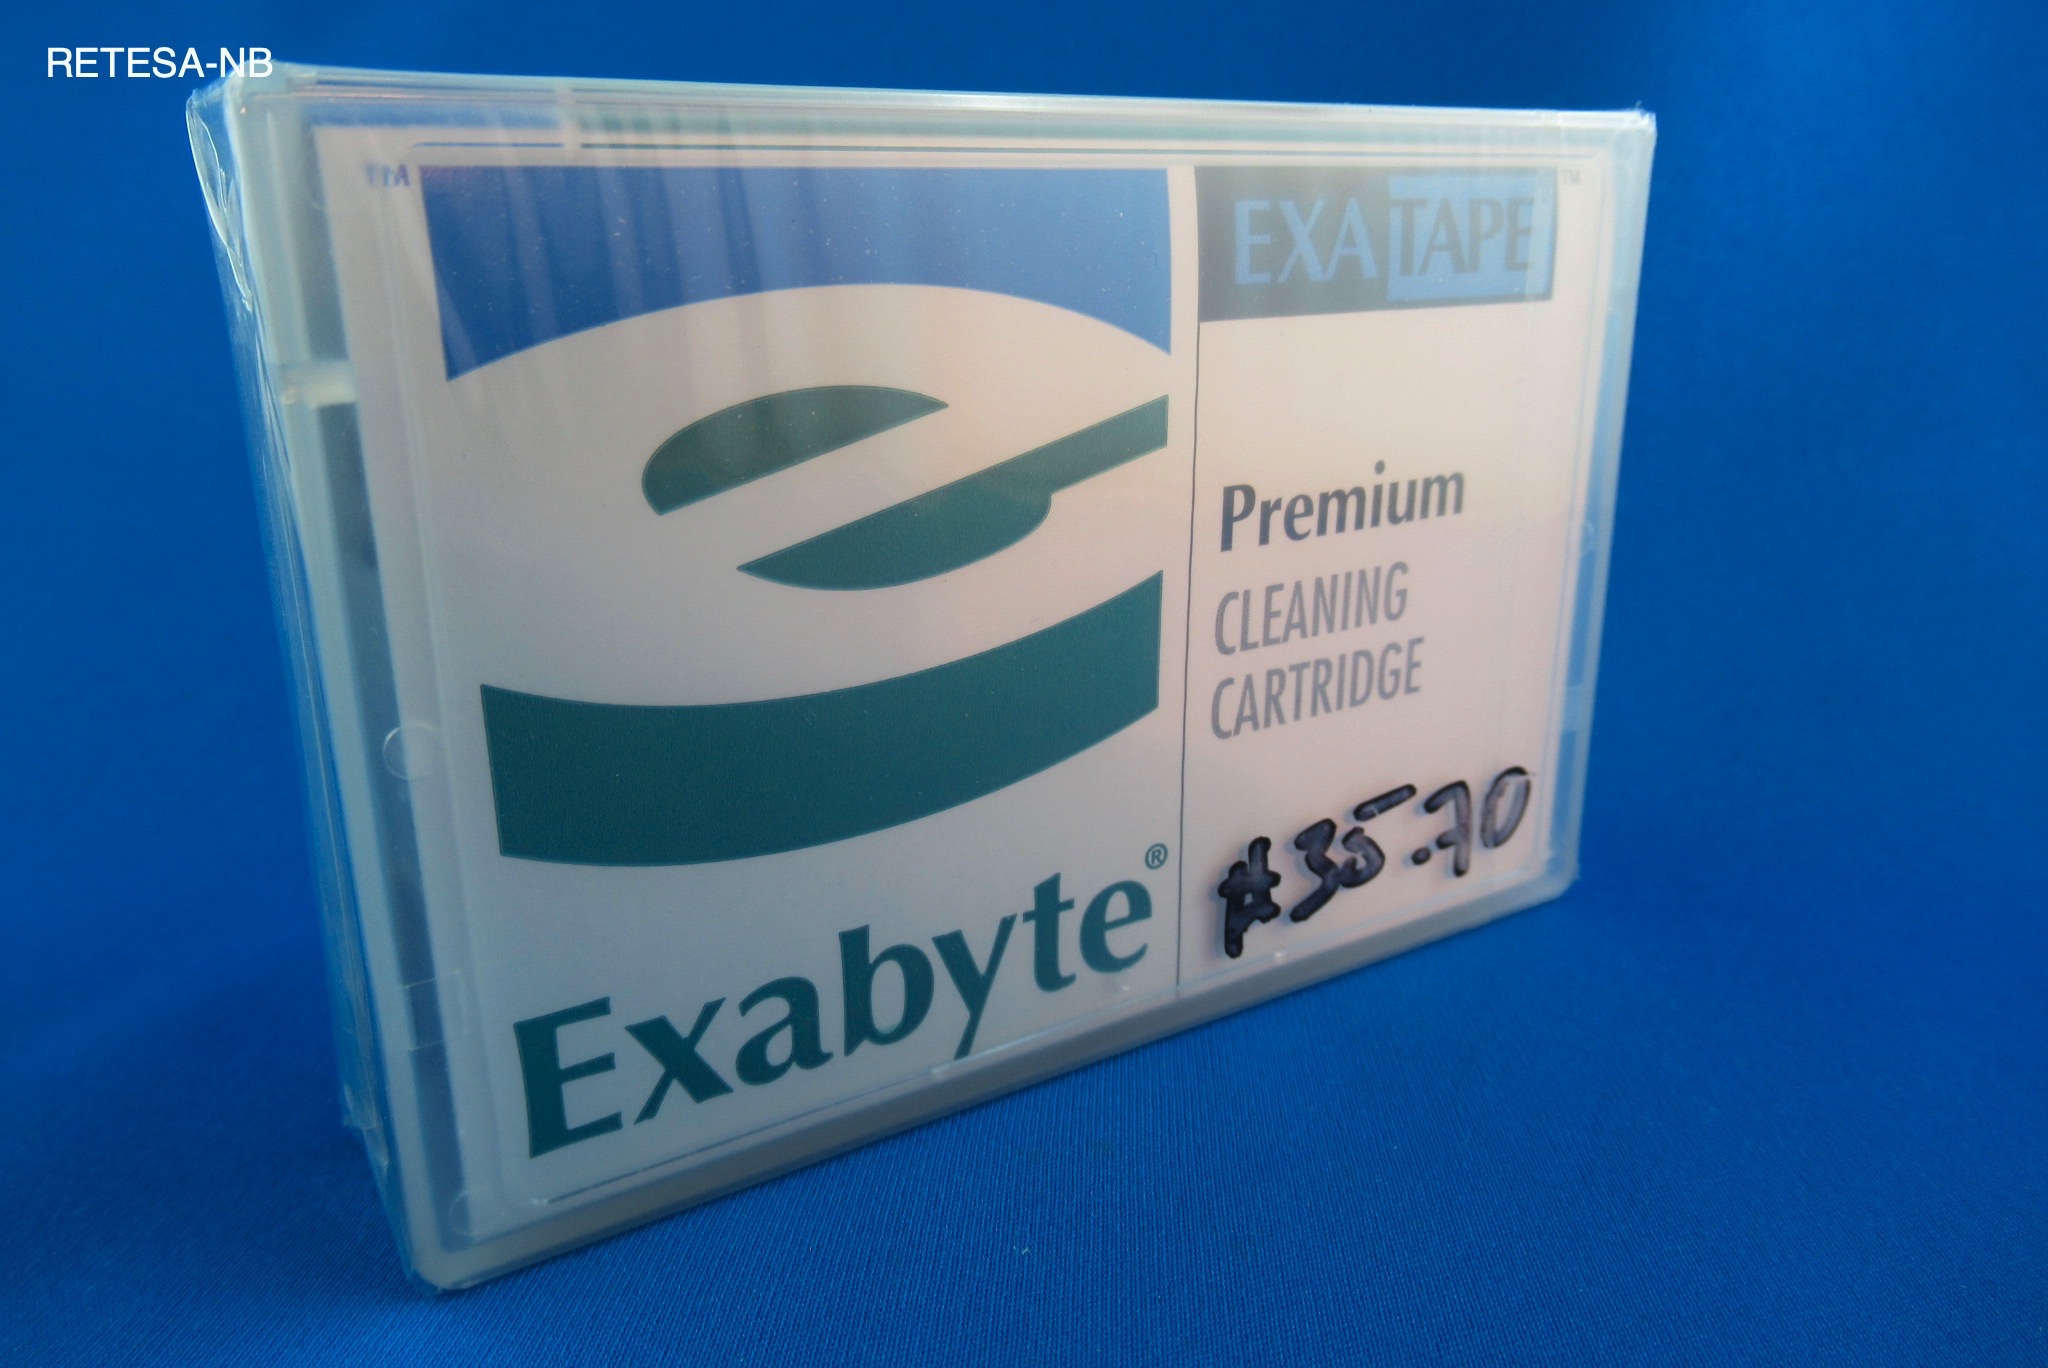 EXABYTE-Cartridge 8 mm Premium Cleaning